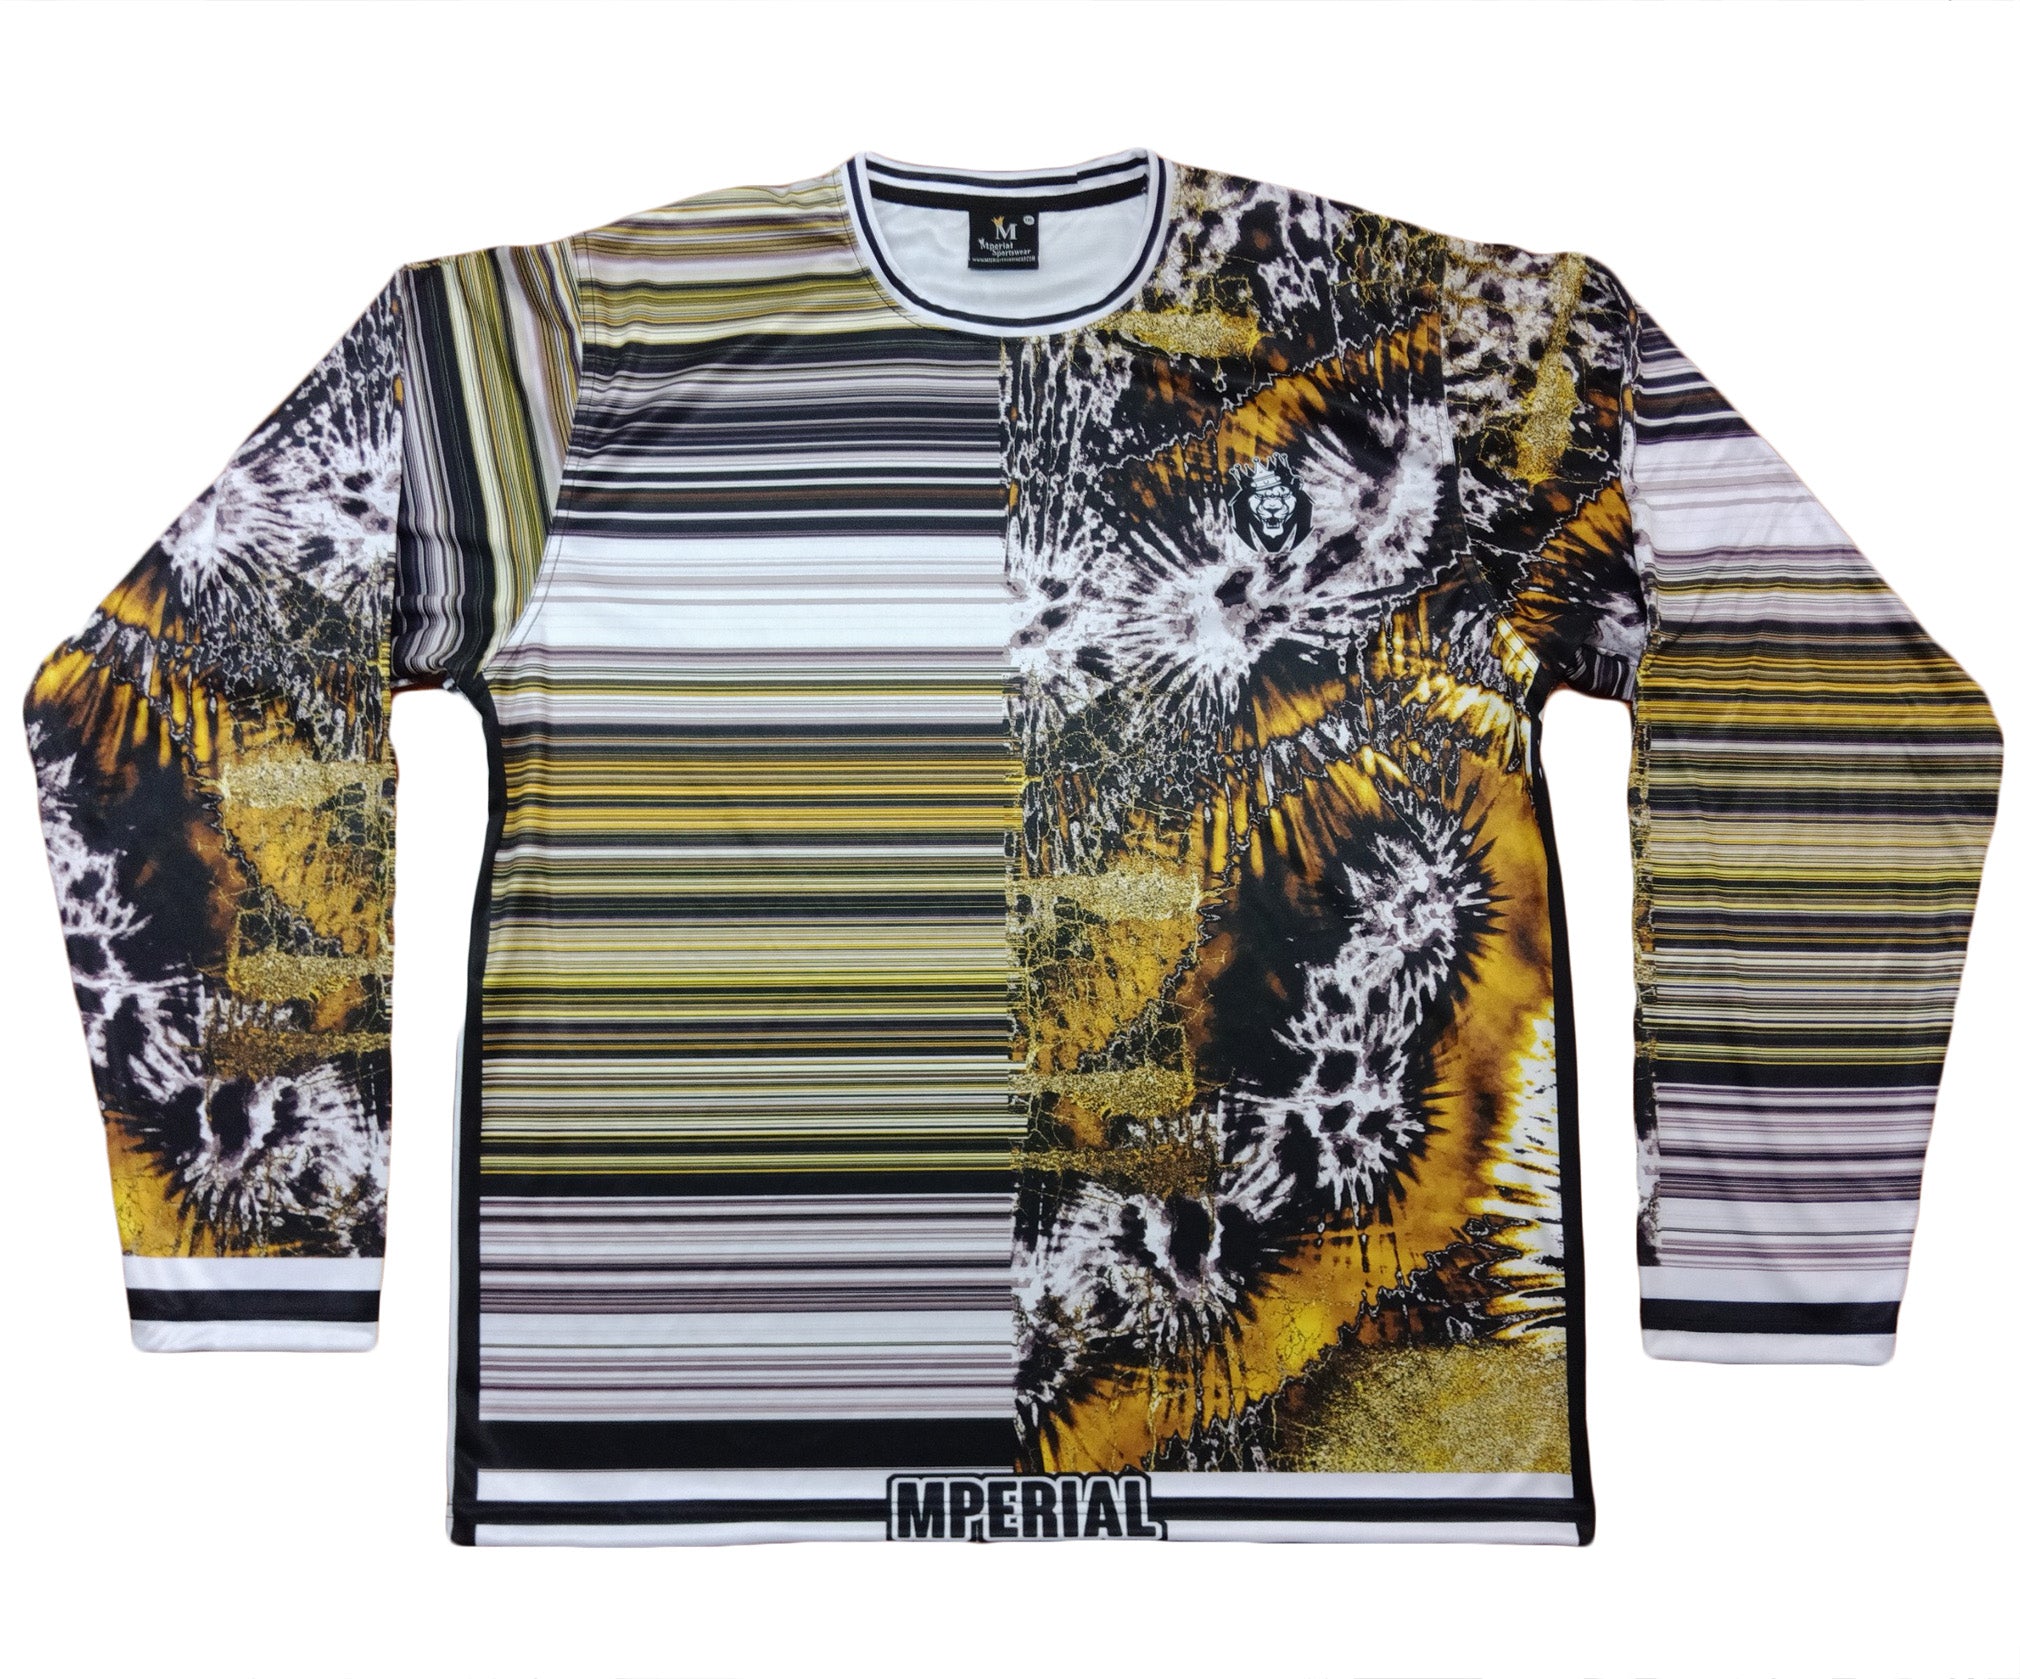 Mperial 50-50 Full Sleeve Shirt